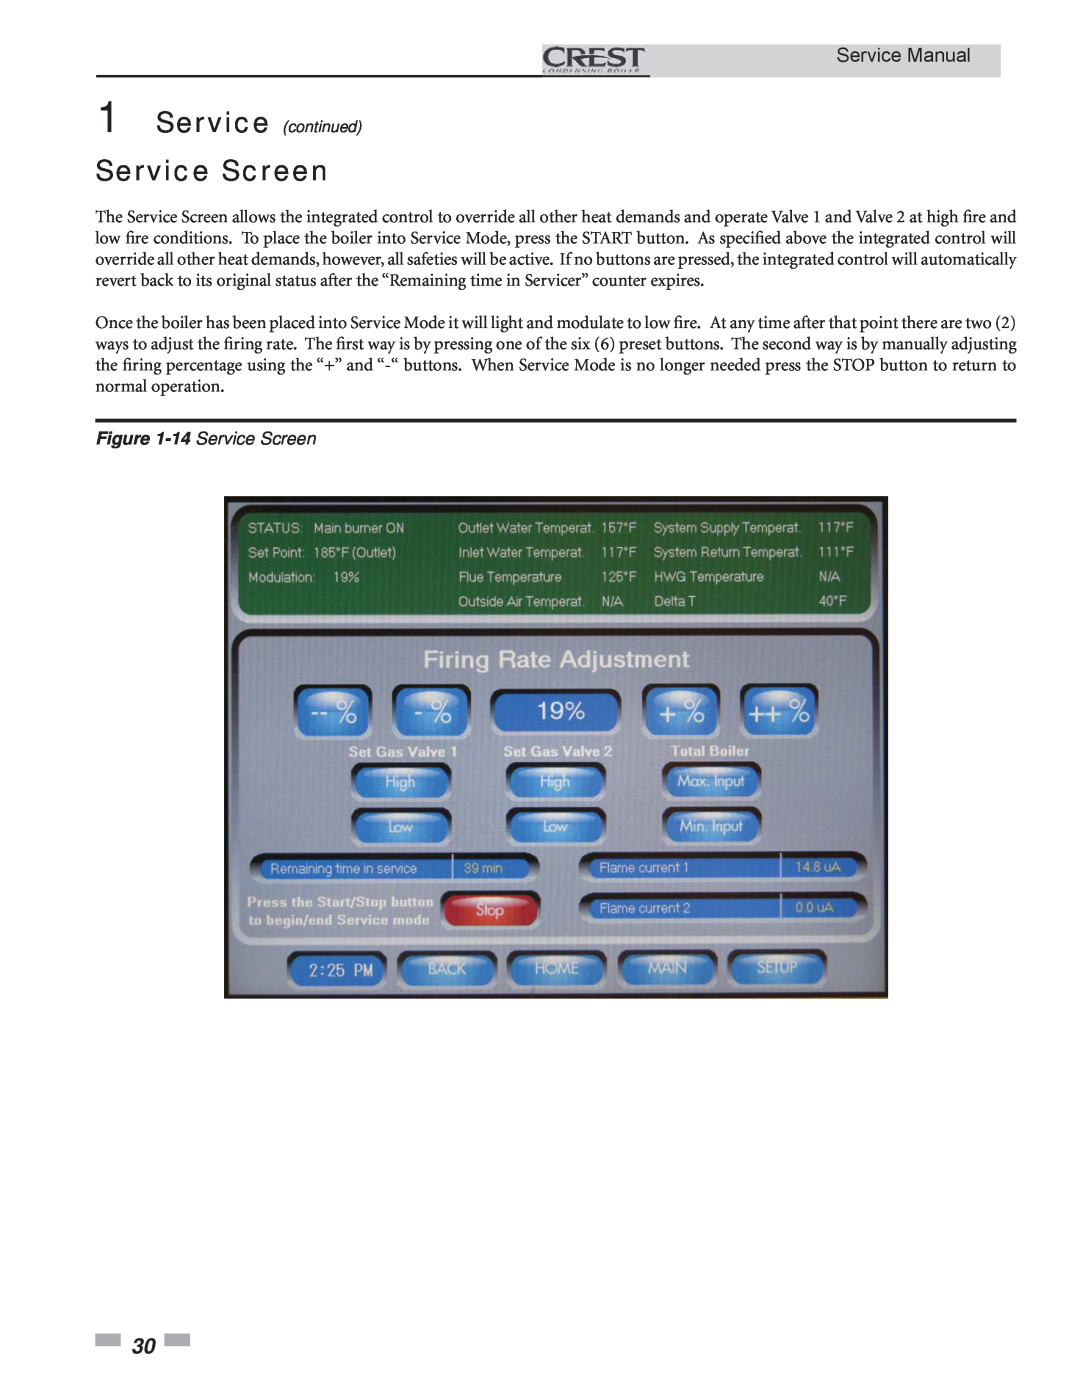 Lochinvar 1.5, 3.5, 2.5 service manual 14 Service Screen 